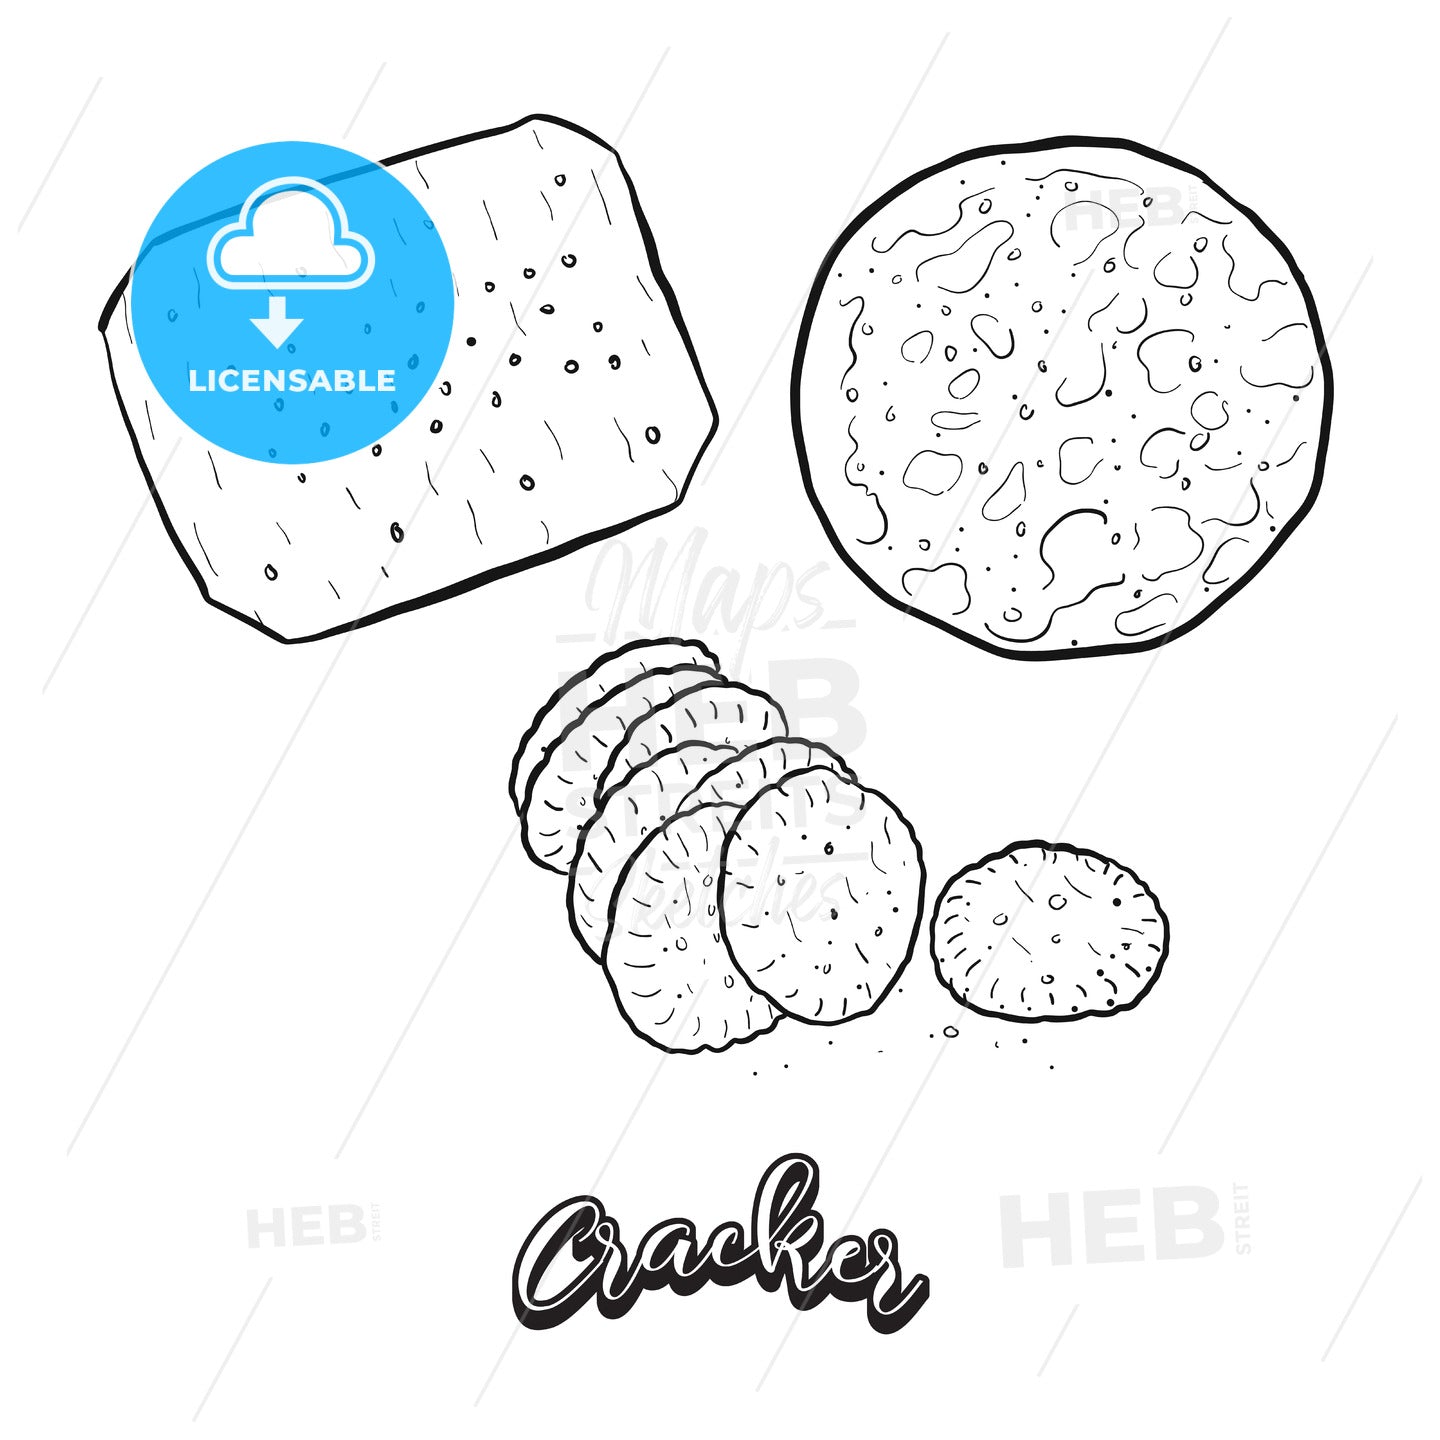 Hand drawn sketch of Cracker bread – instant download